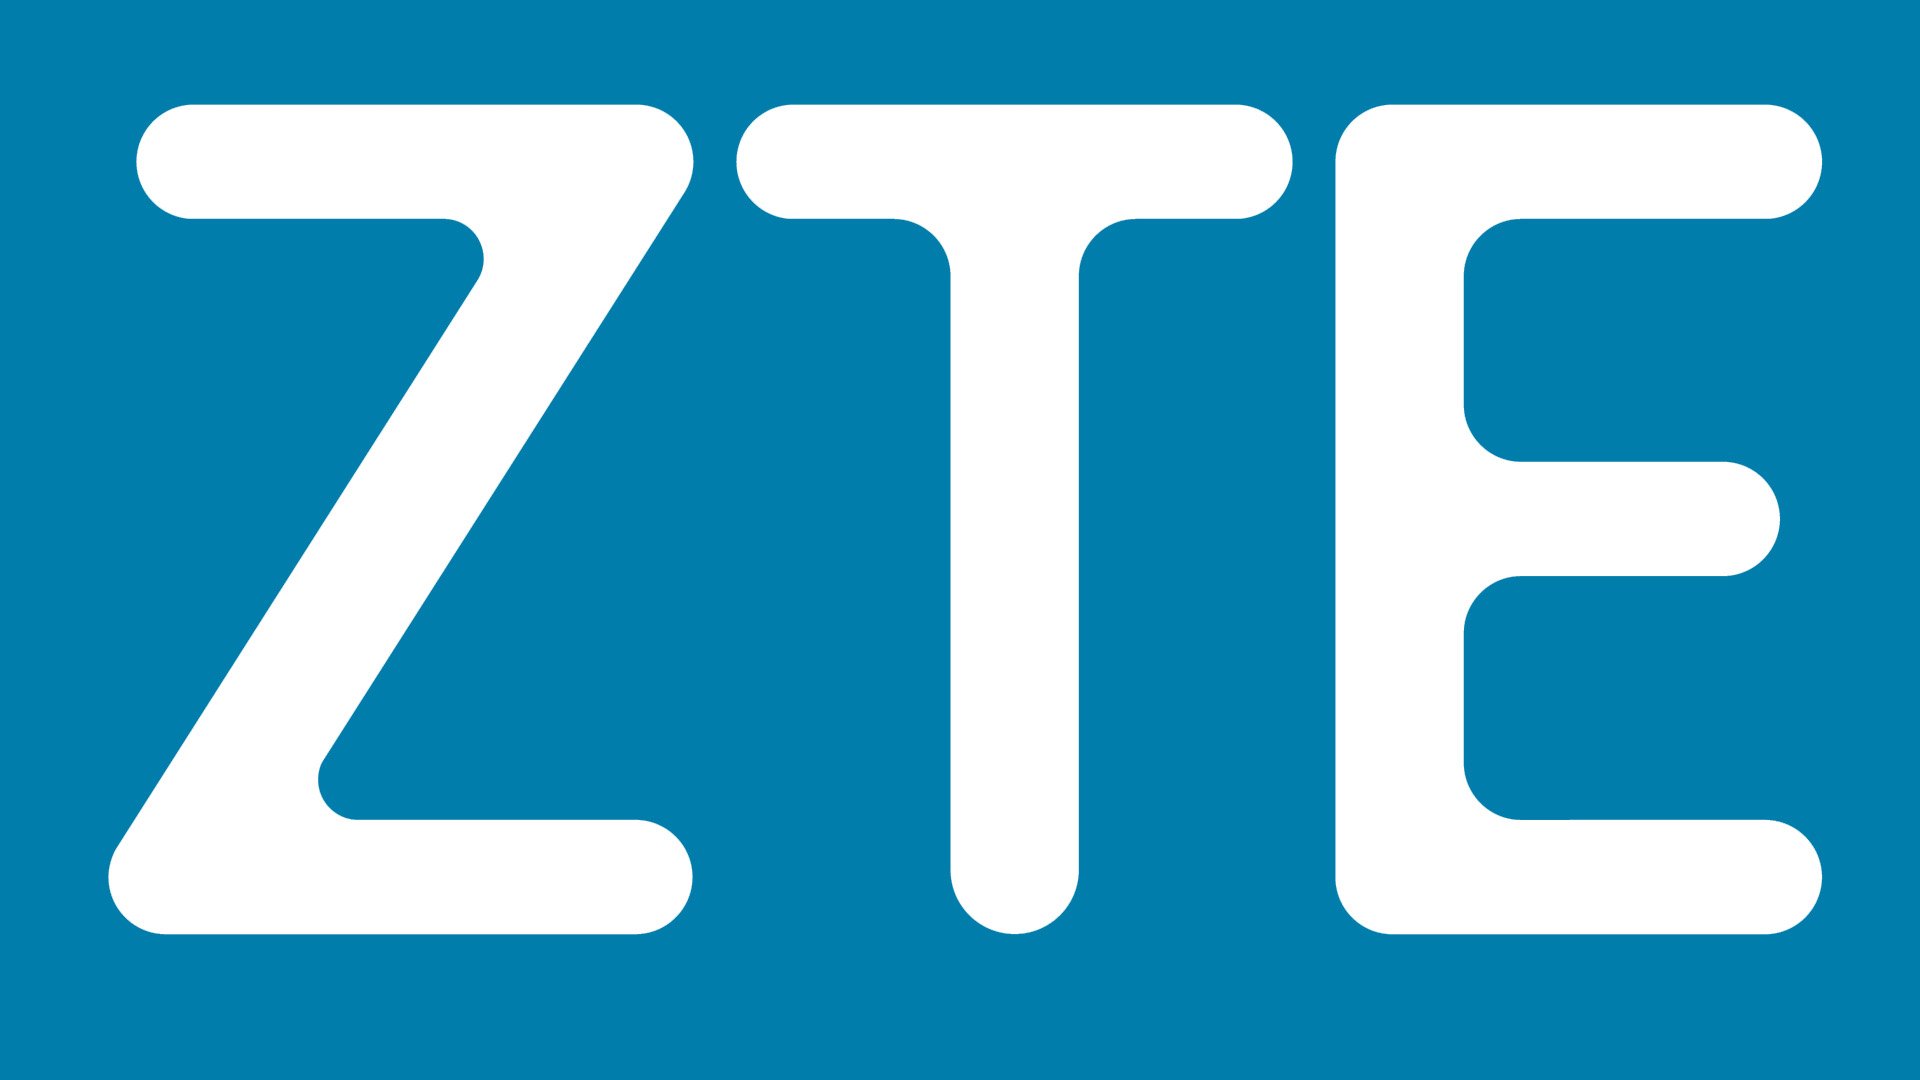 ZTE Zinger Soft Reset Guide [Frozen Screen Fix]